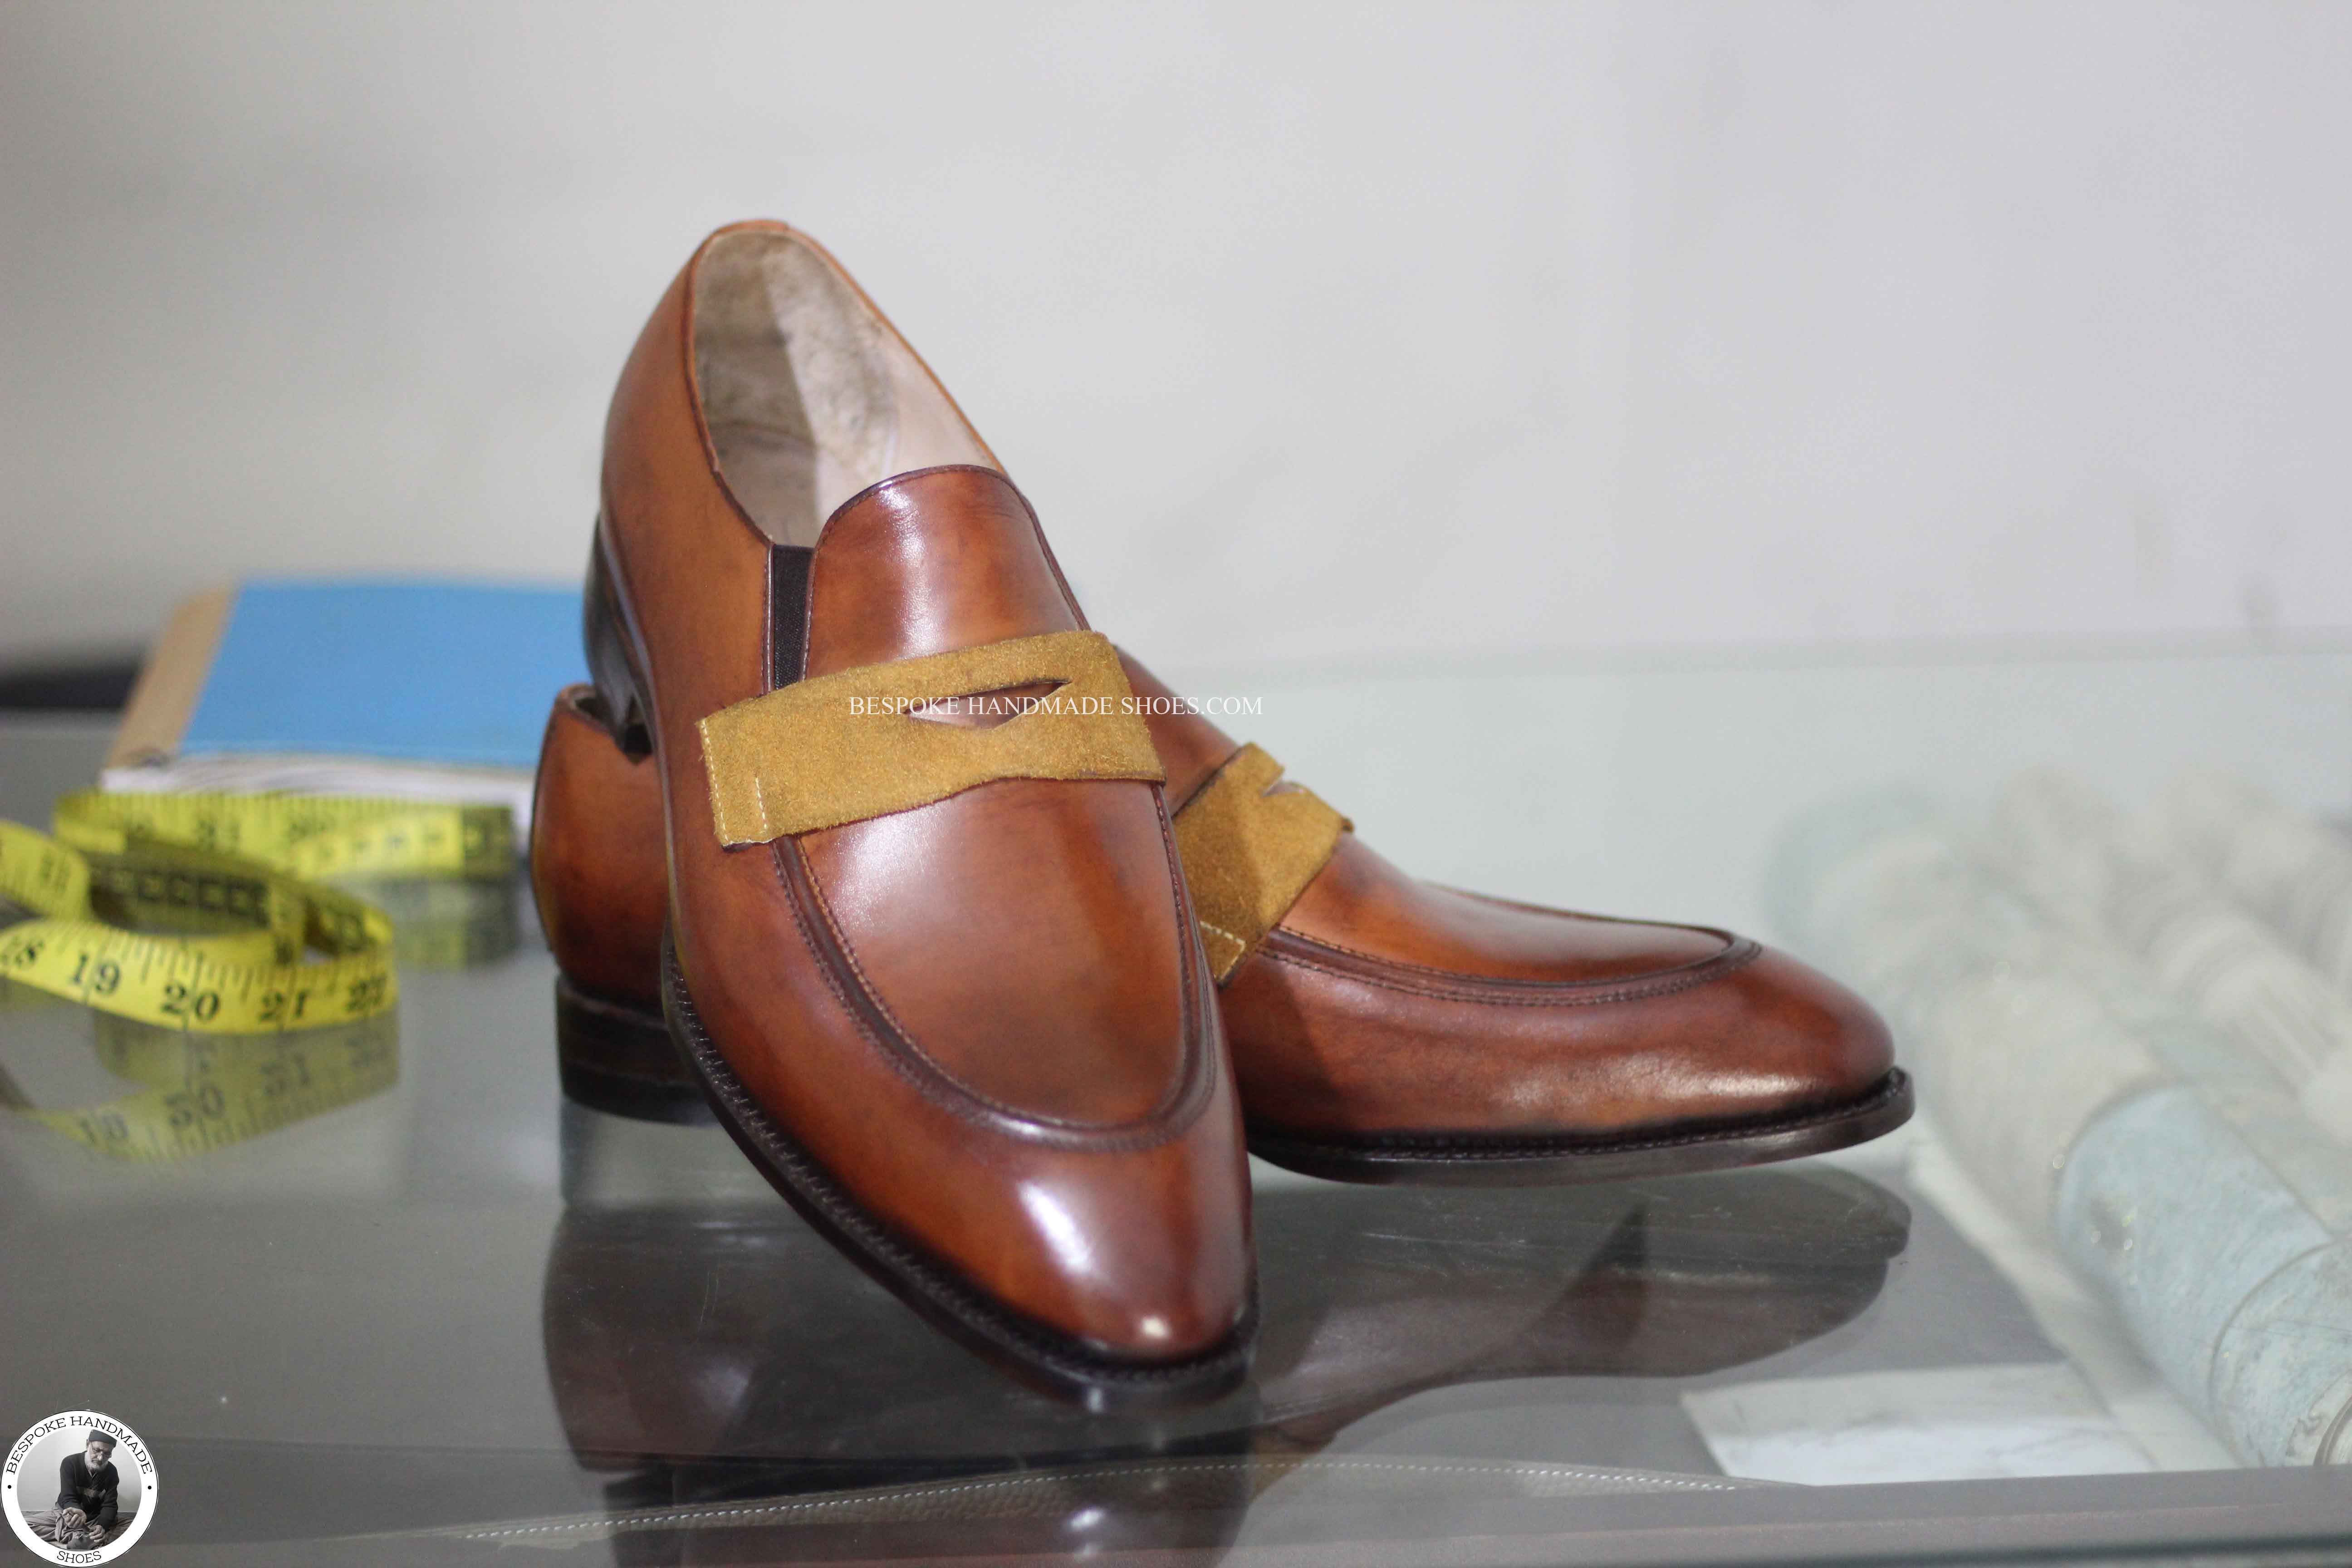 Bespoke Men's Handmade Brown Leather Loafer Moccasin Slip On Casual Shoes For Men's